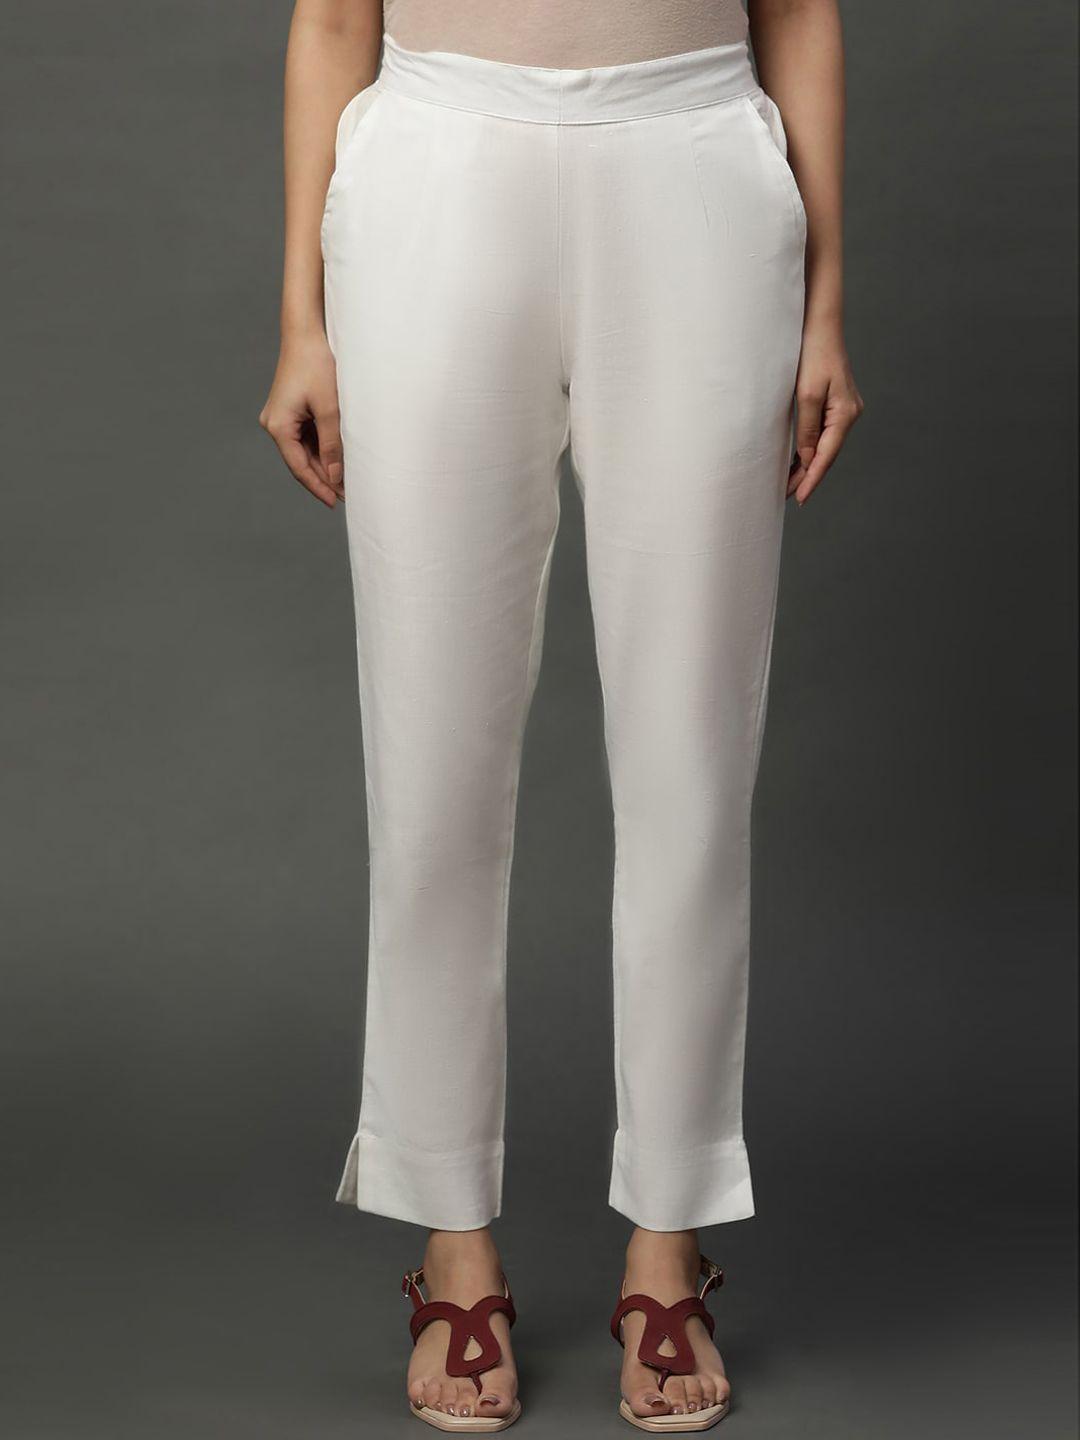 aurelia women white slim fit trousers